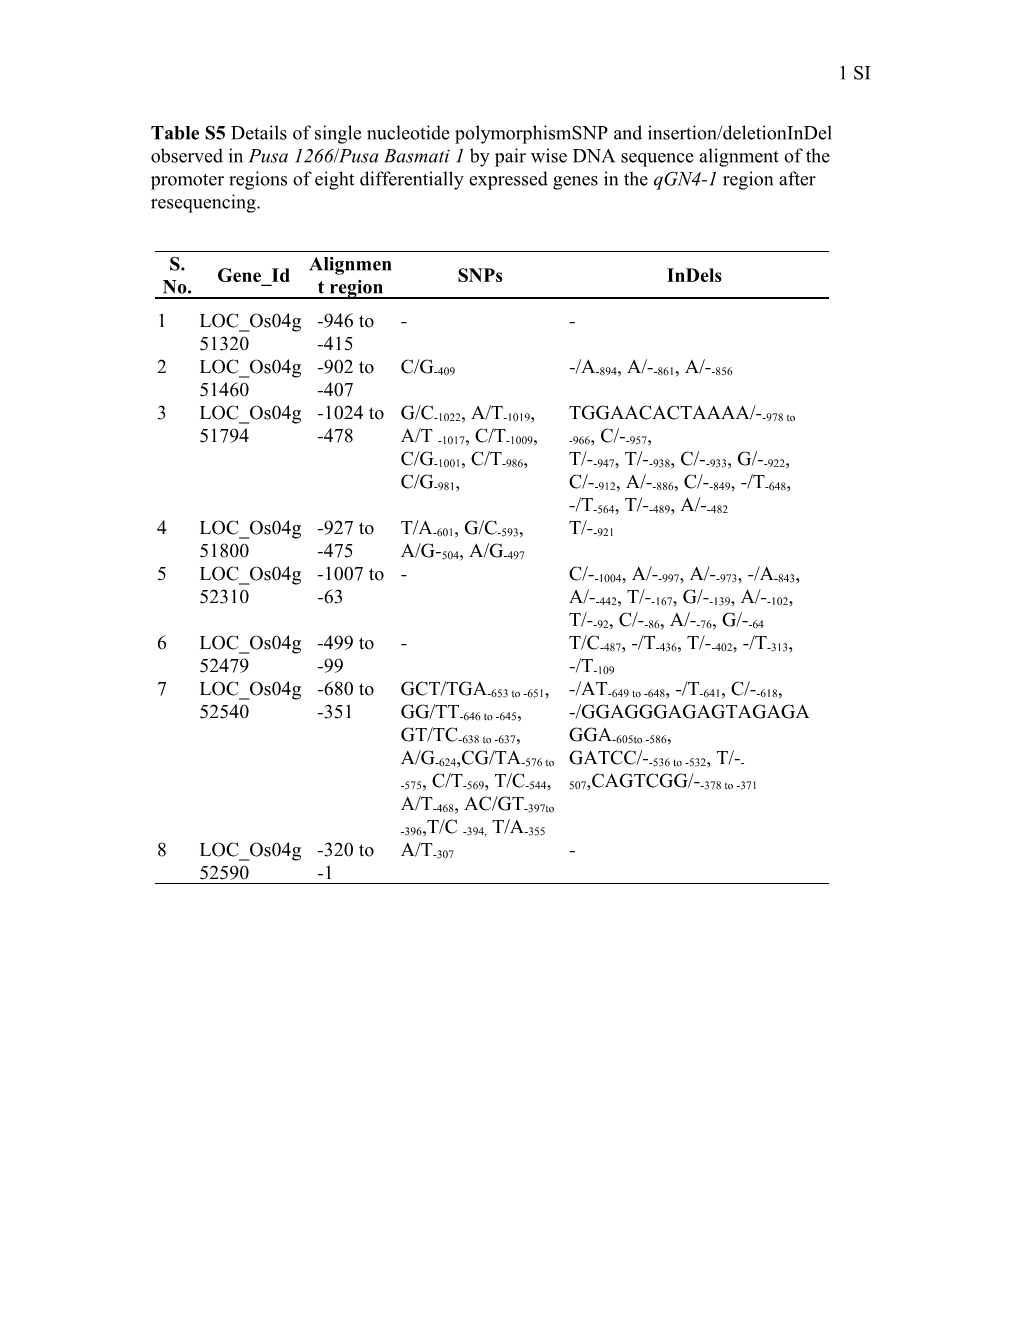 Table S5details of Single Nucleotide Polymorphismsnp and Insertion/Deletionindel Observed